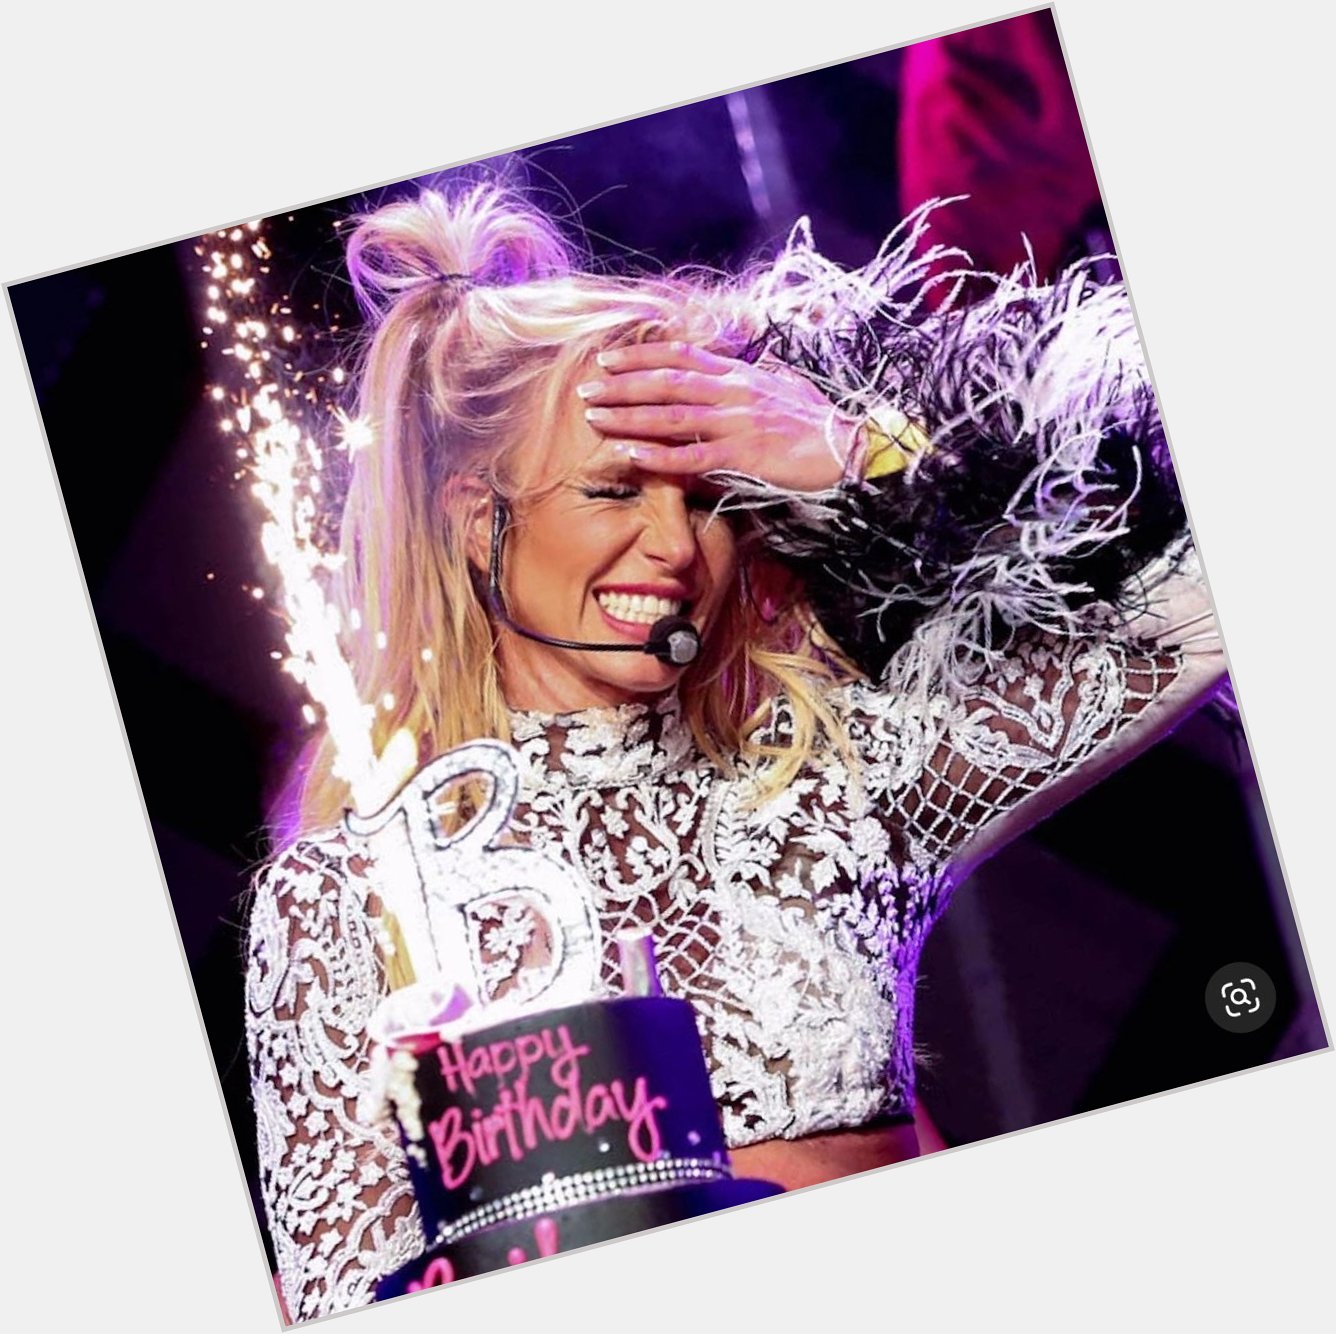 HAPPY BIRTHDAY TO YOU
Britney spears   